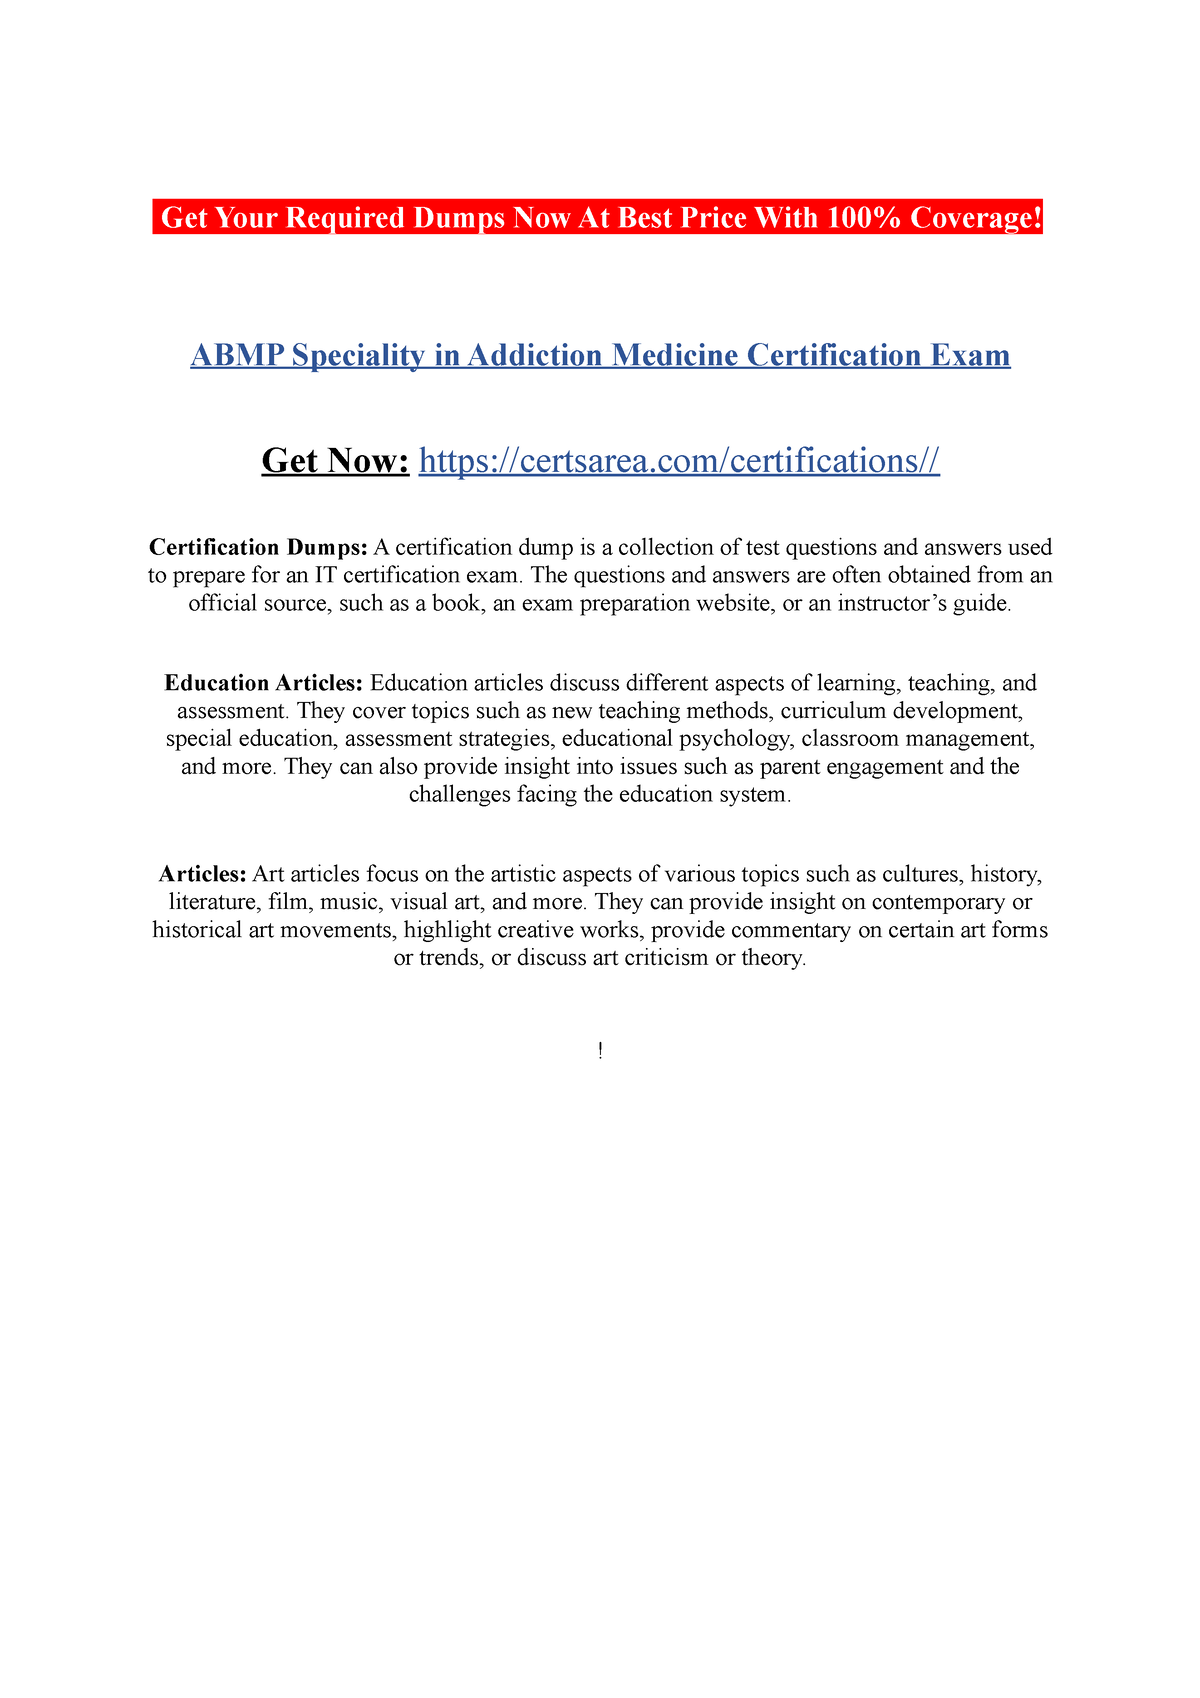 ABMP Speciality in Addiction Medicine Certification Exam Studocu